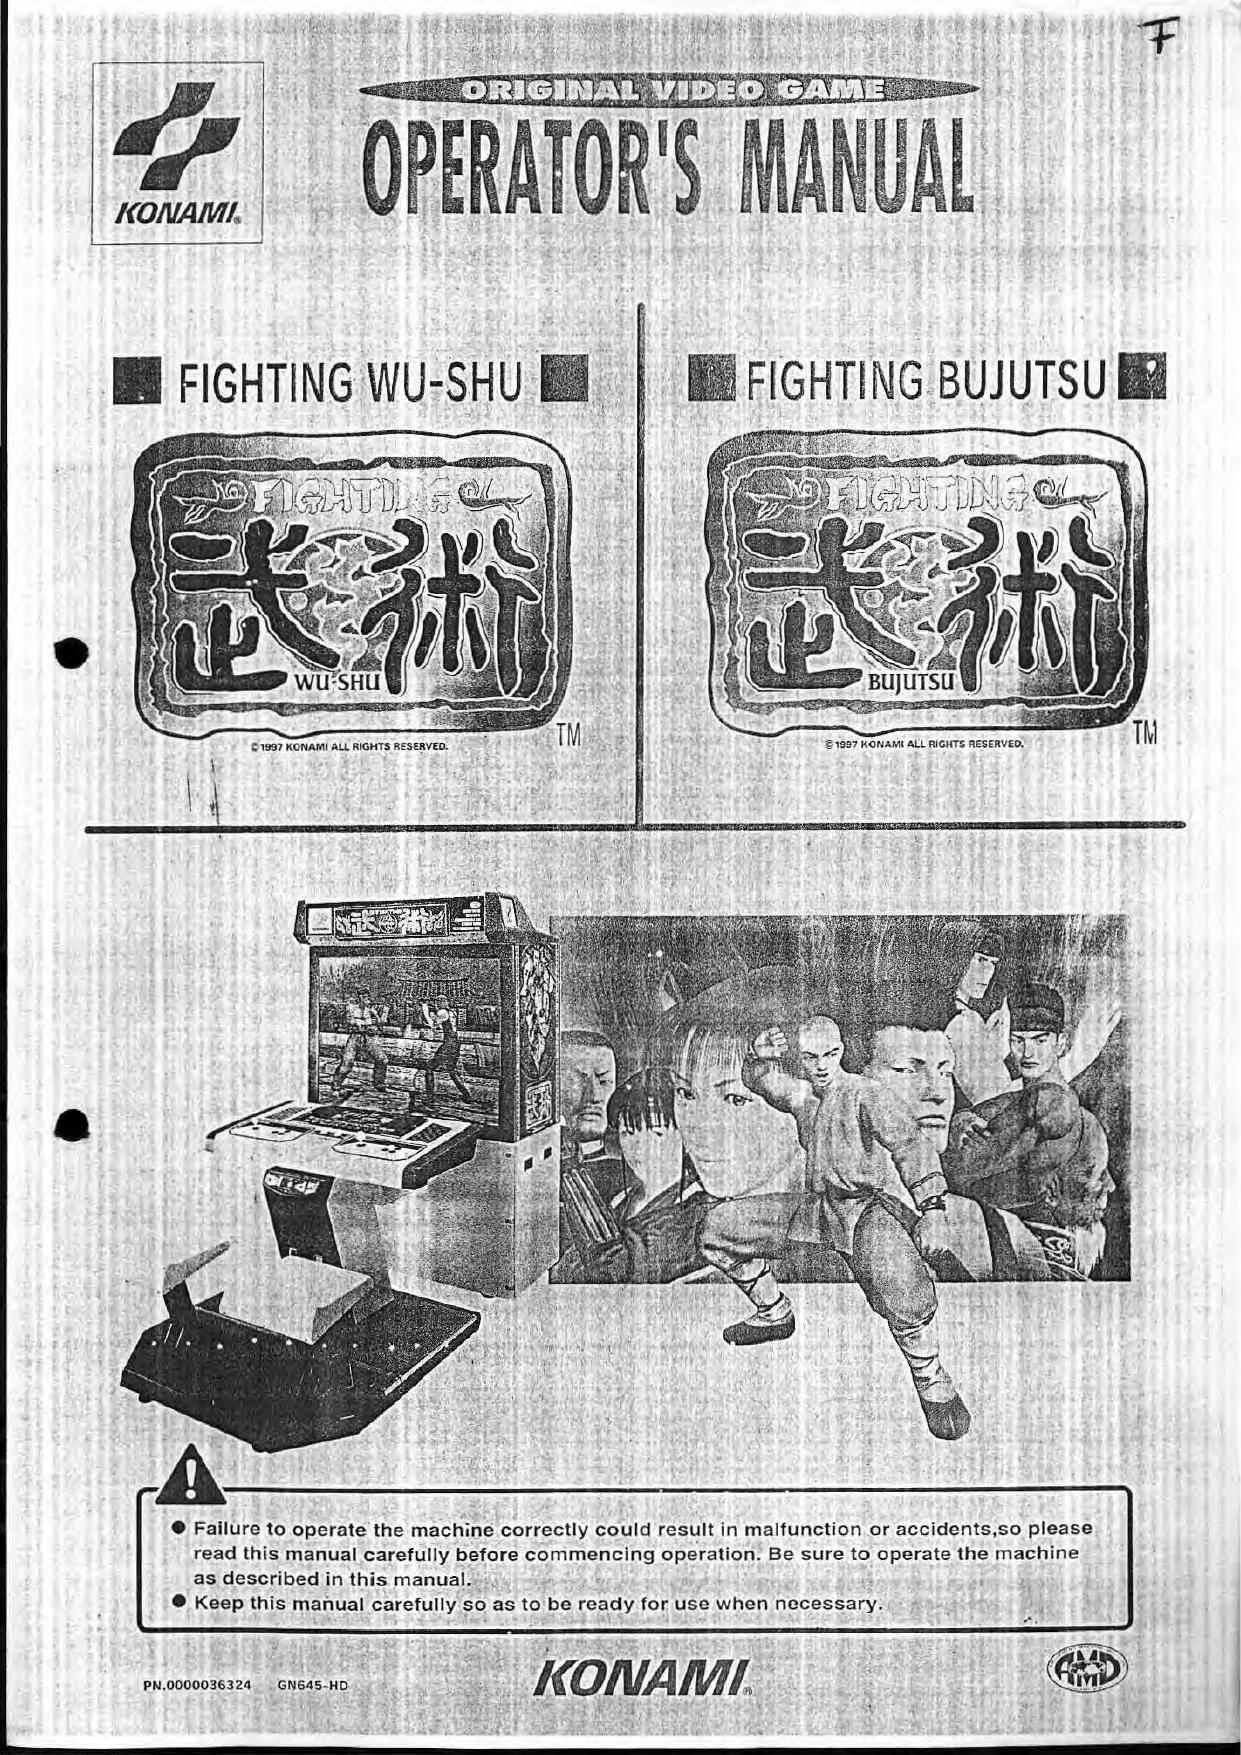 FIGHTING WU-SHU